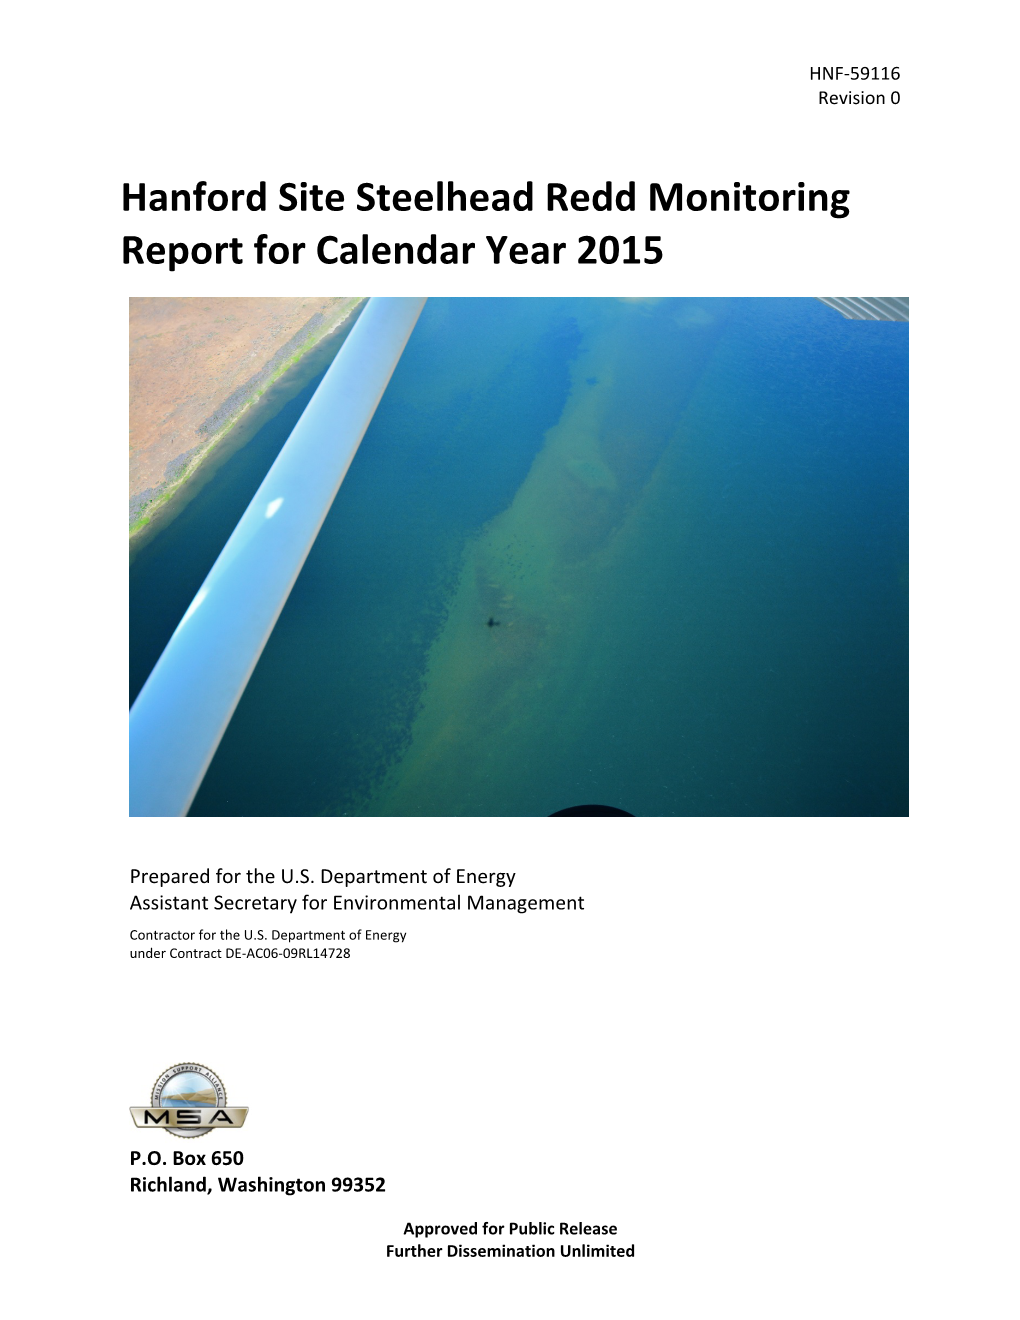 Steelhead Redd Monitoring Report for Calendar Year 2015